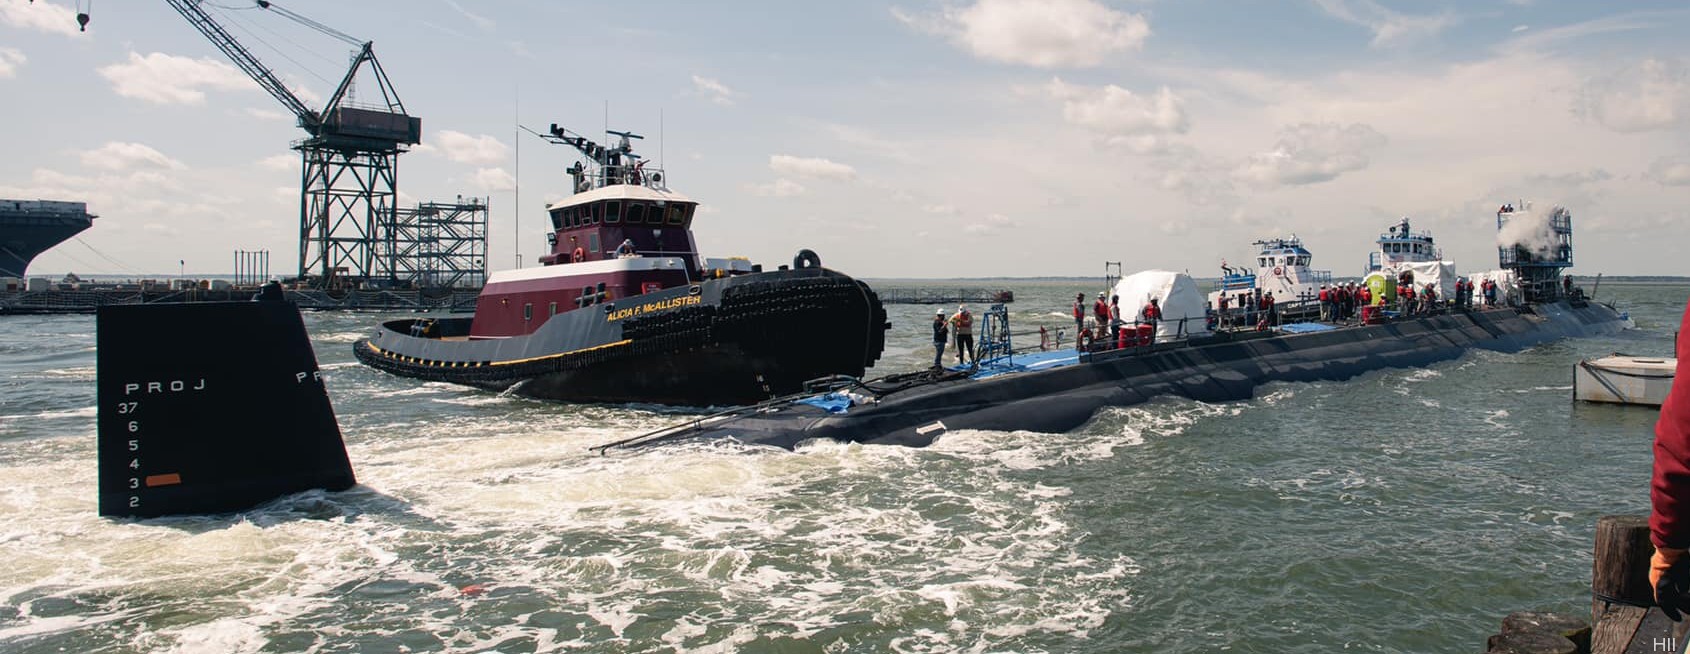 ssn-796 uss new jersey virginia class attack submarine us navy launching 07